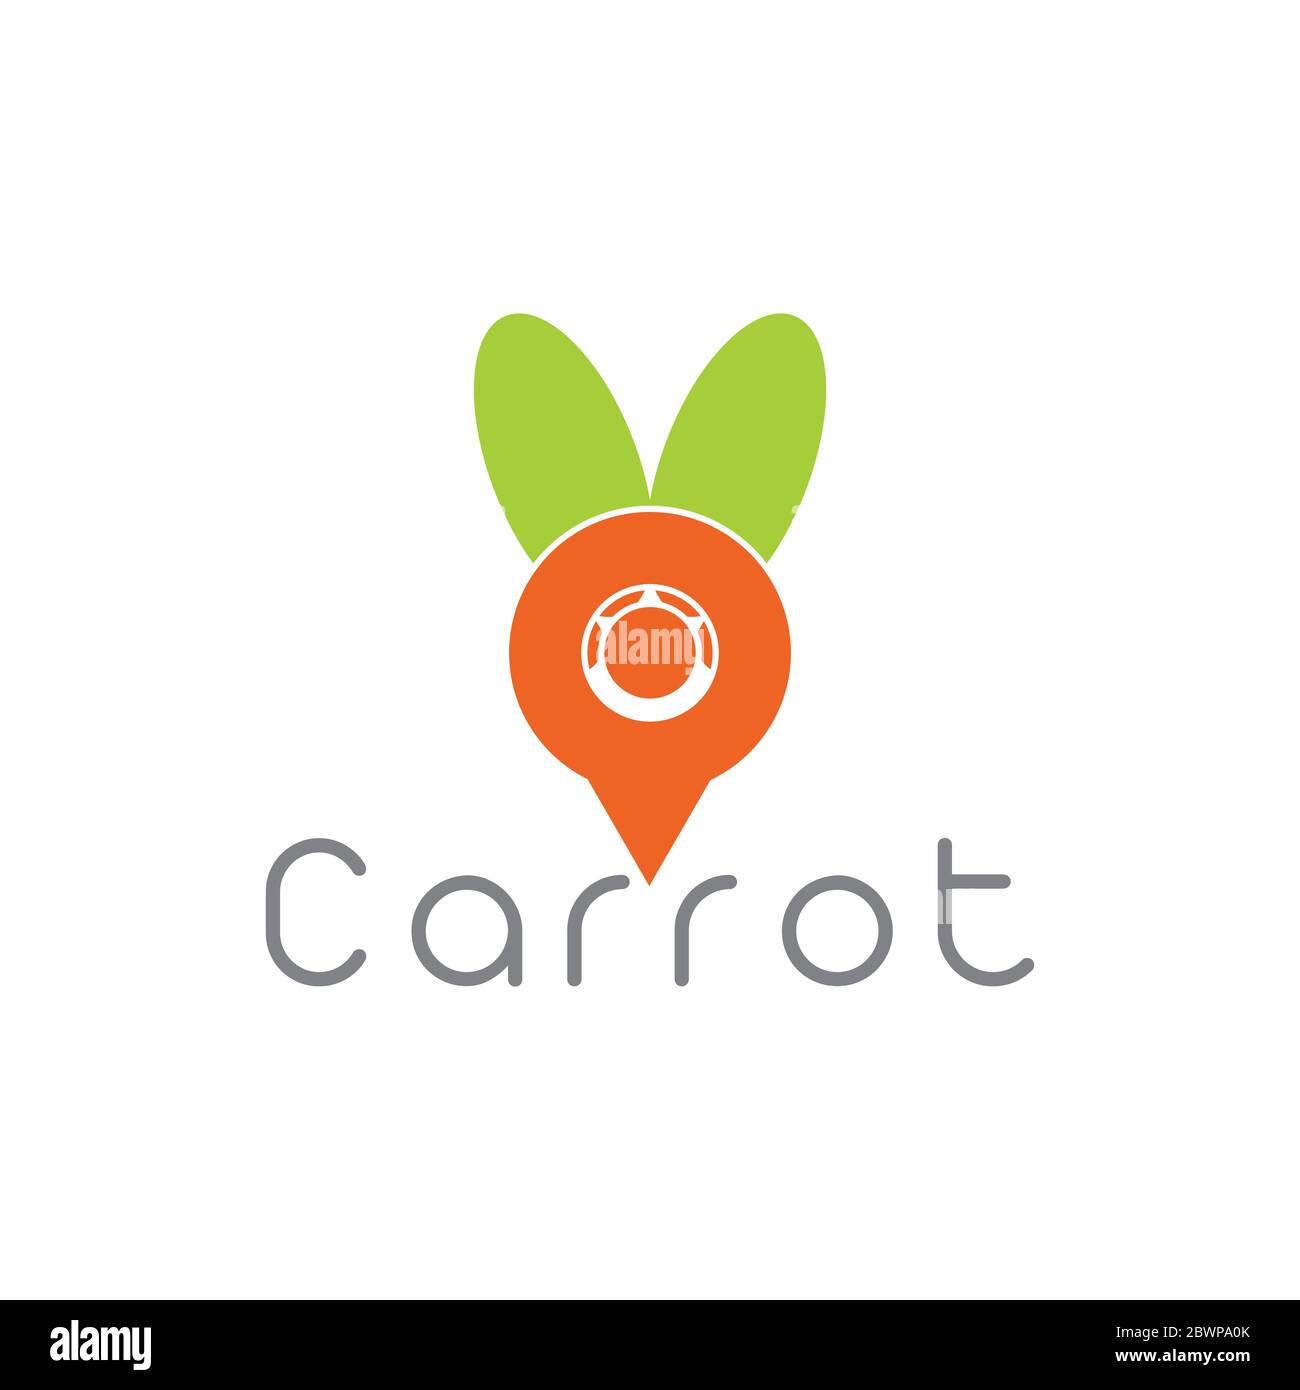 carrot simple geometric logo vector Stock Vector